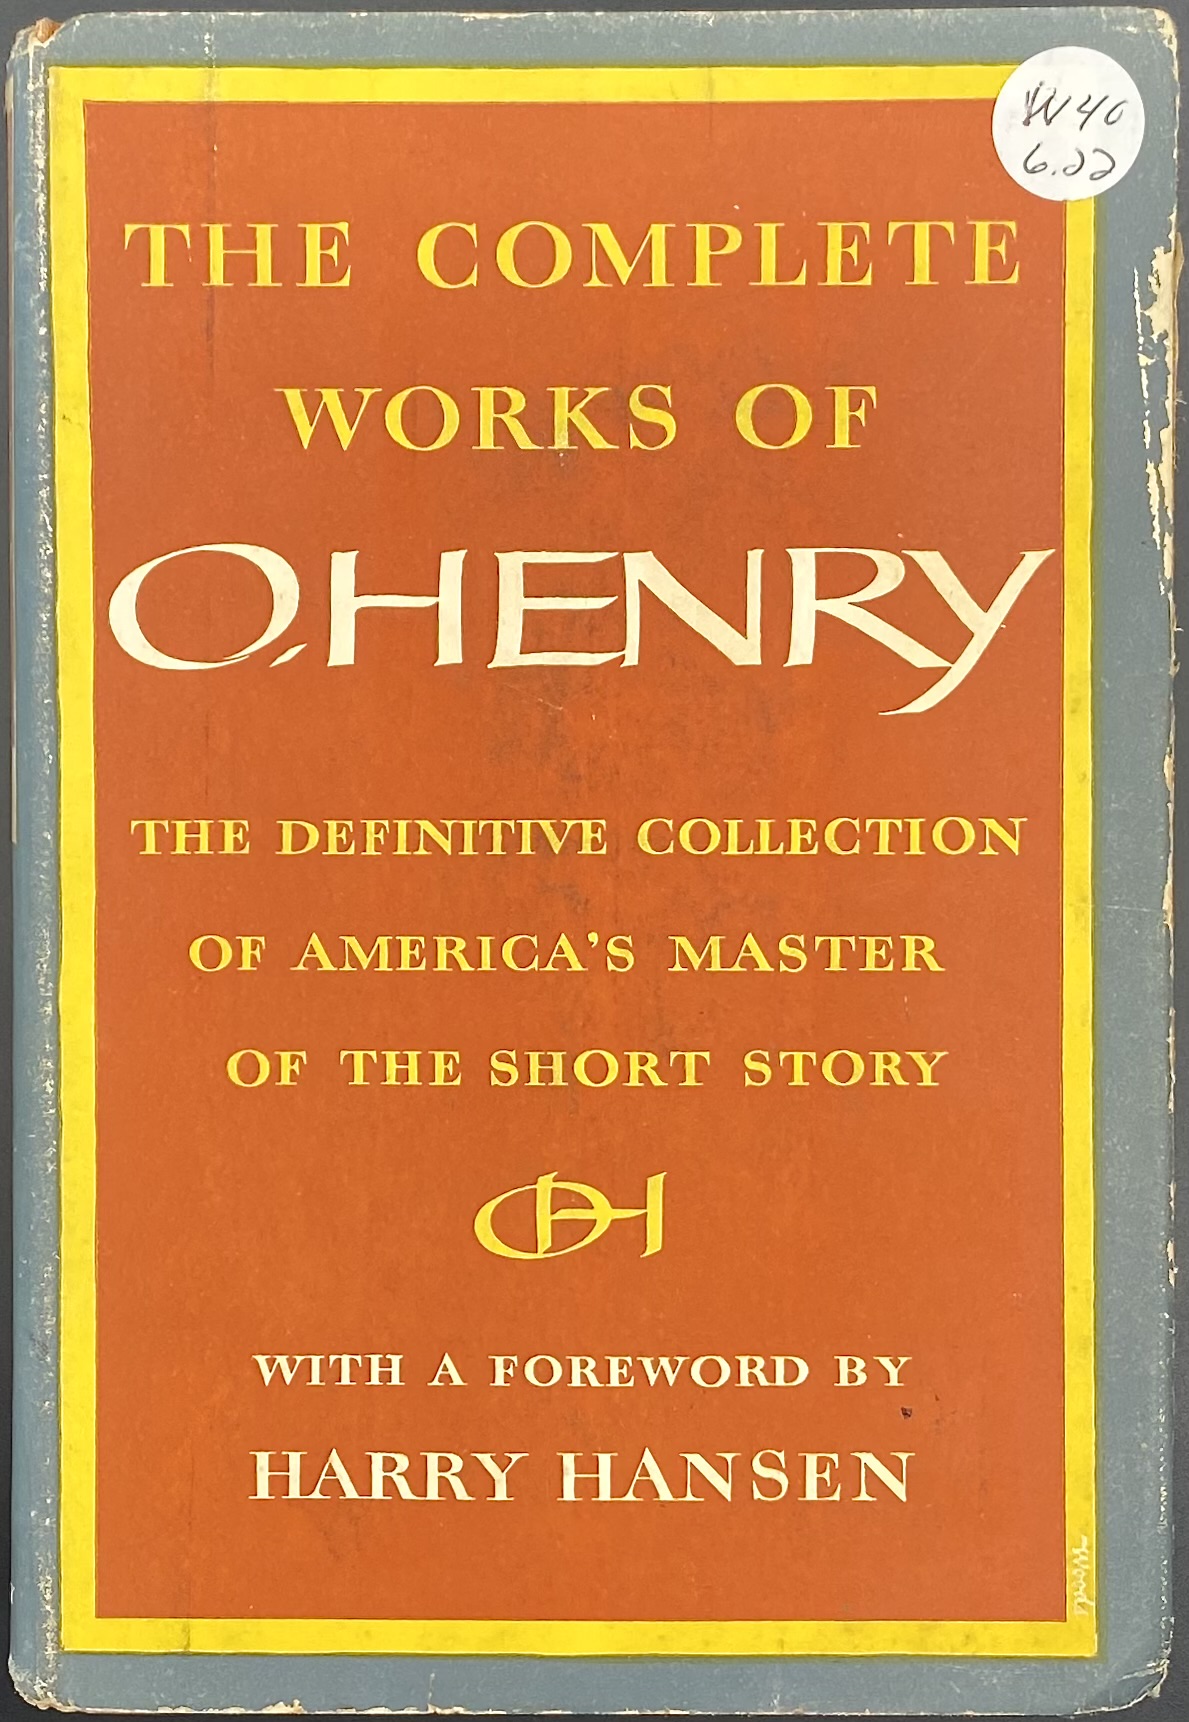 works of Henry / Foreword by Harry Hansen (2 volumes). — Garden City, NY: Doubleday, 1953. | Varshavsky